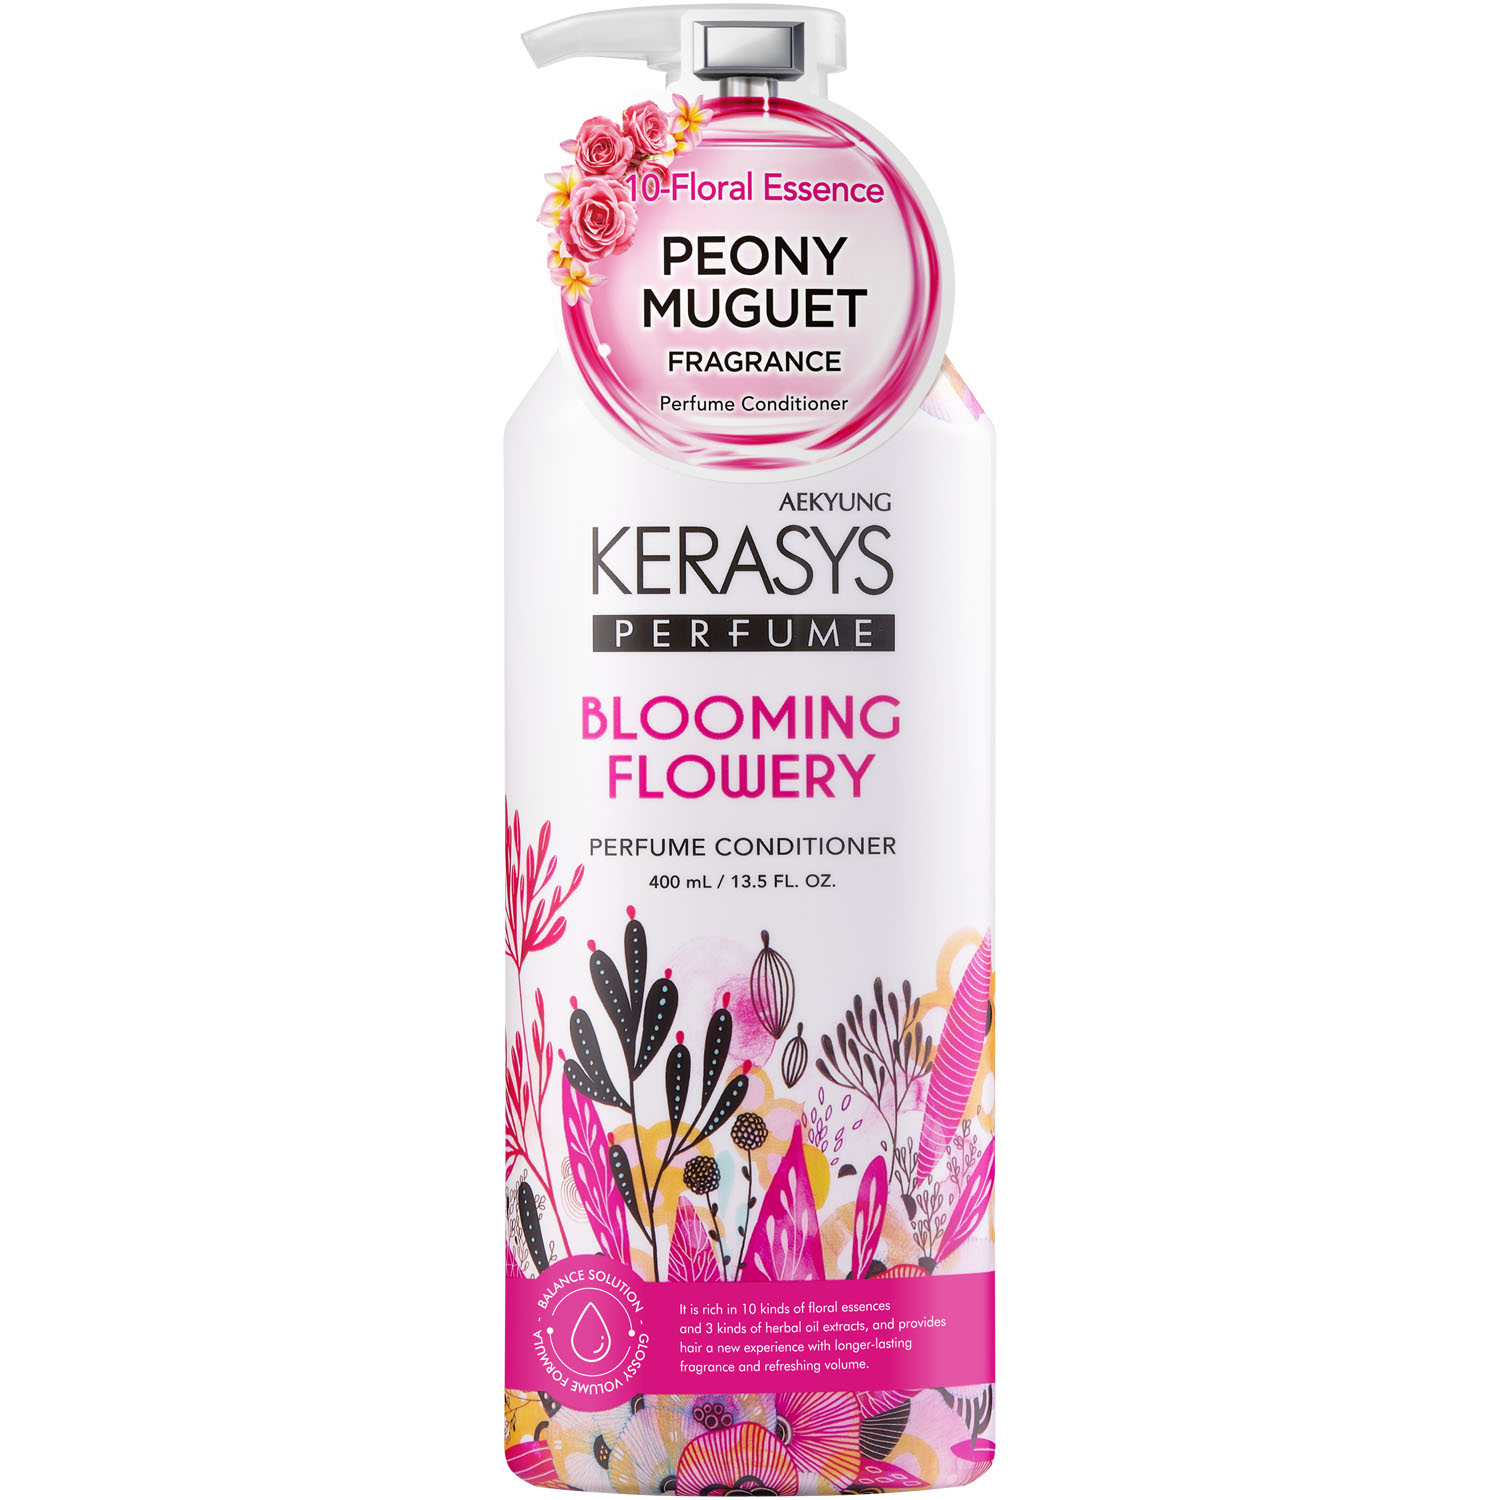 Kerasys Кондиционер для всех типов волос Blooming Flowery, 400 мл (Kerasys, Perfumed Line) kerasys шампунь для всех типов волос glam stylish 400 мл kerasys perfumed line